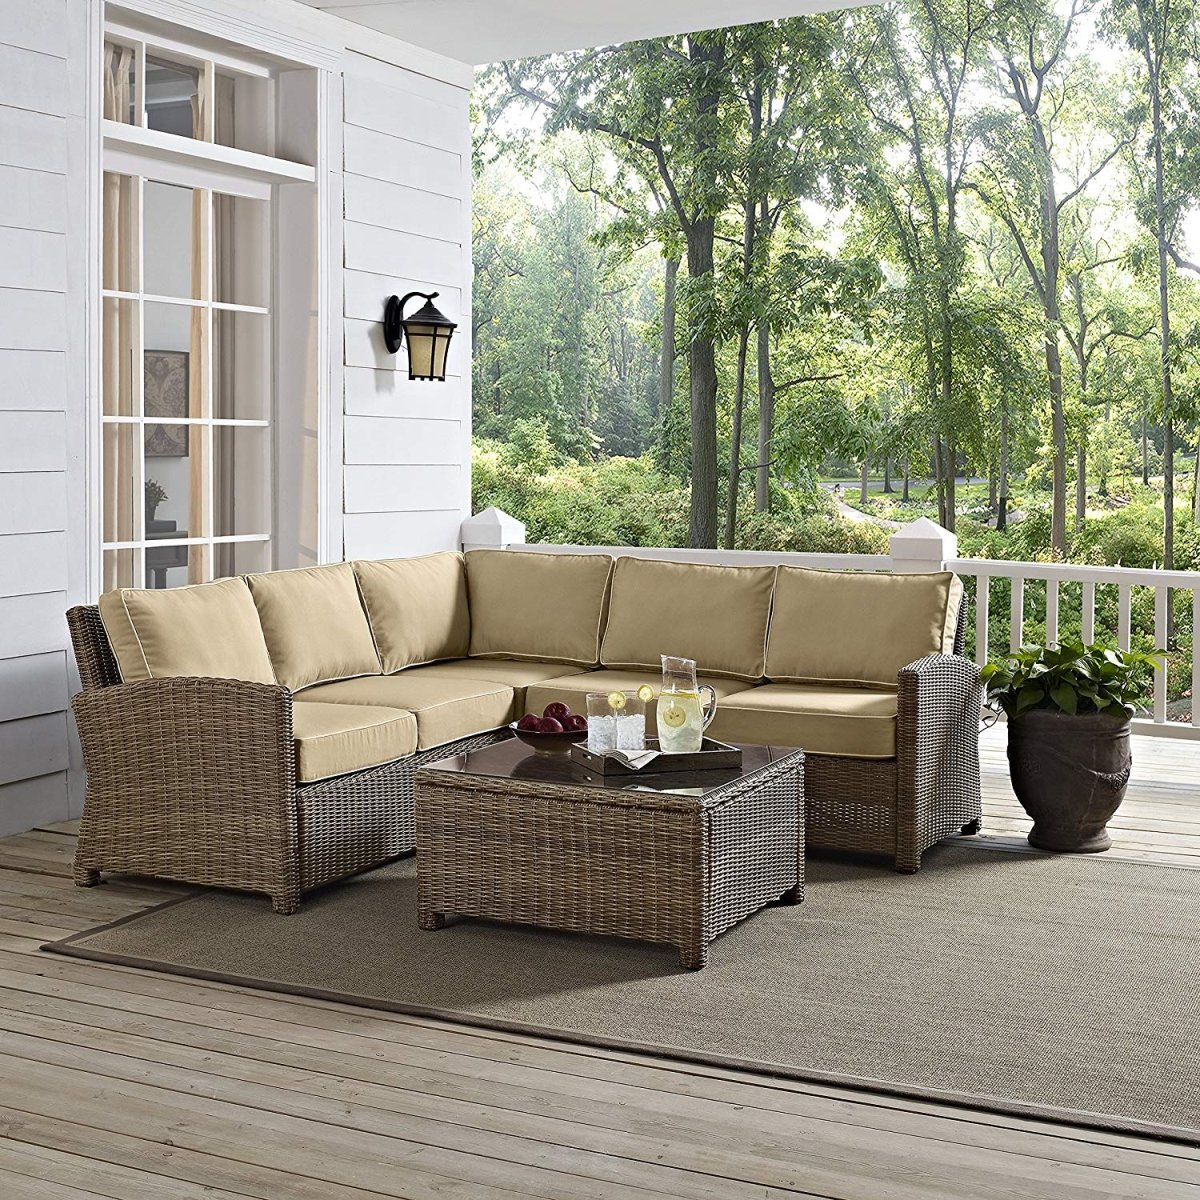 Ko70157-sa 4 Piece Bradenton Outdoor Wicker Seating Set With Sand Cushions - Weathered Brown